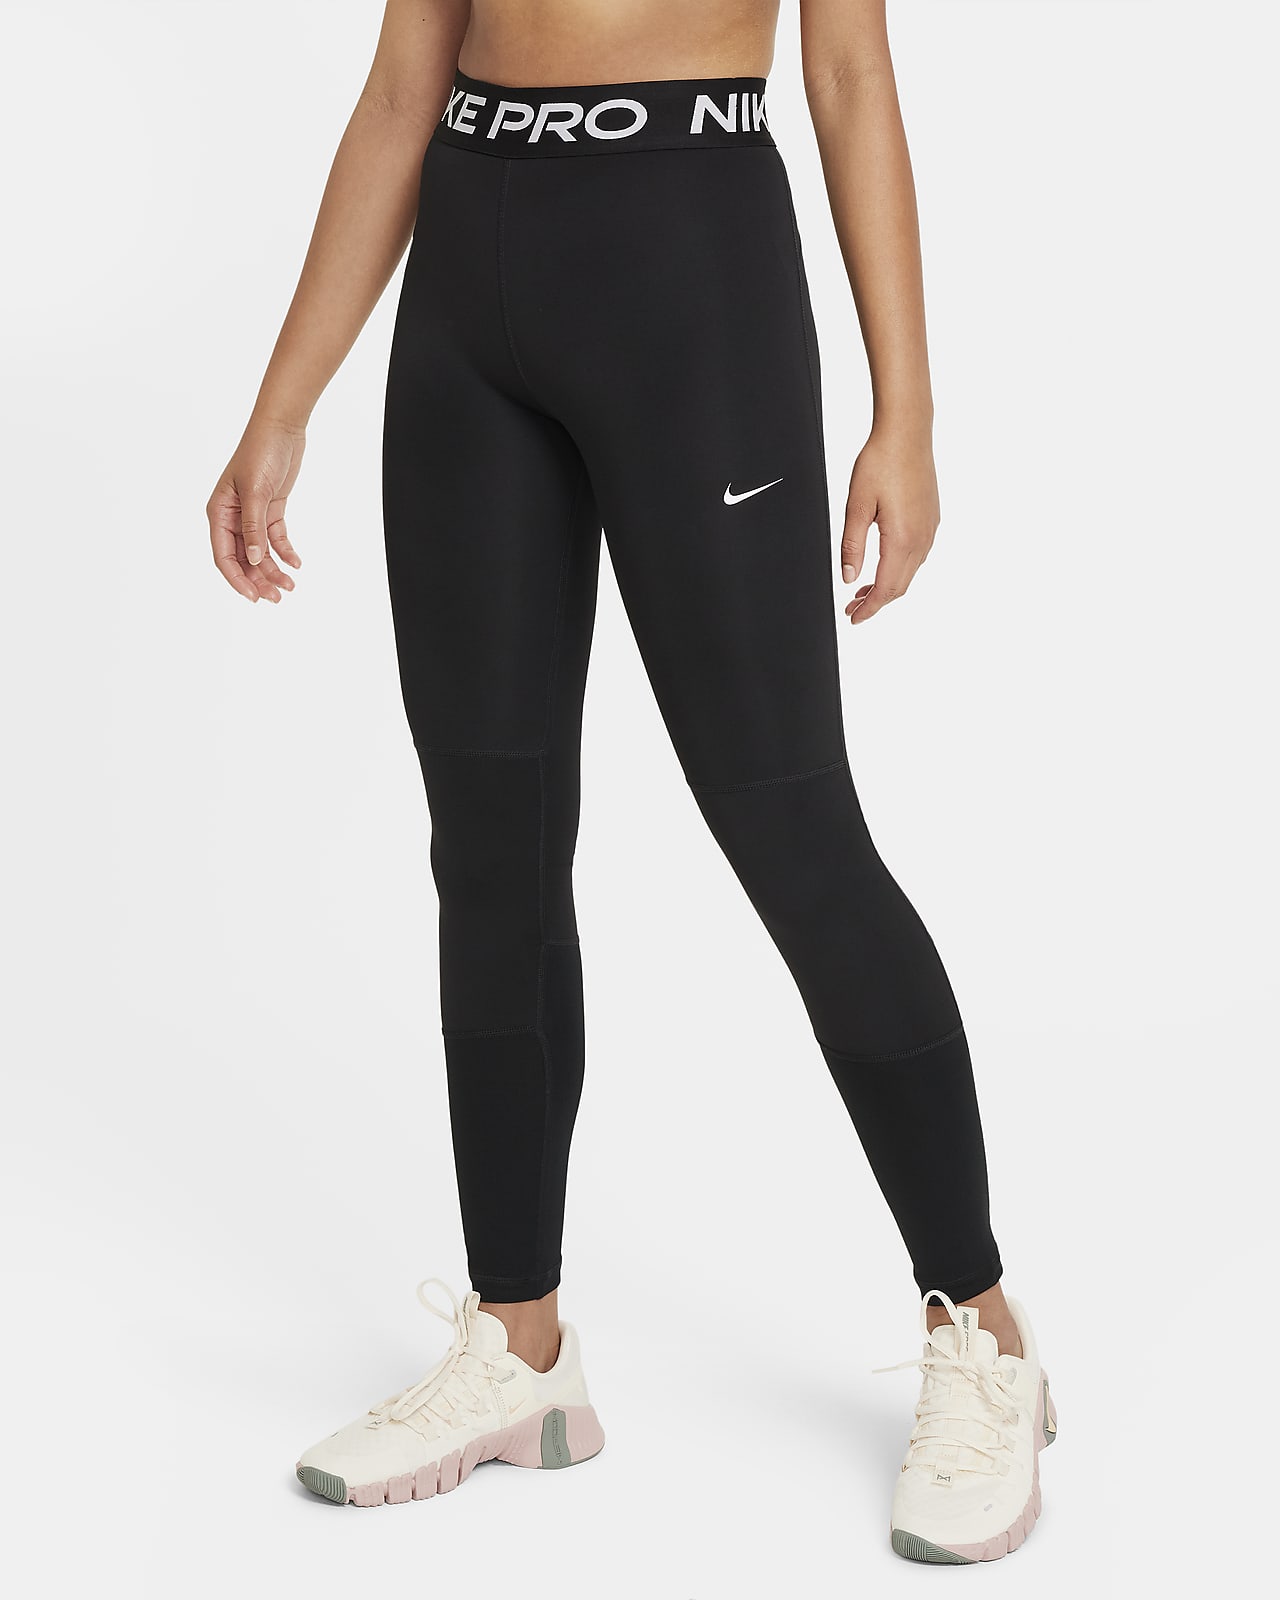 Legging Nike Pro Dri-FIT pour ado (fille)